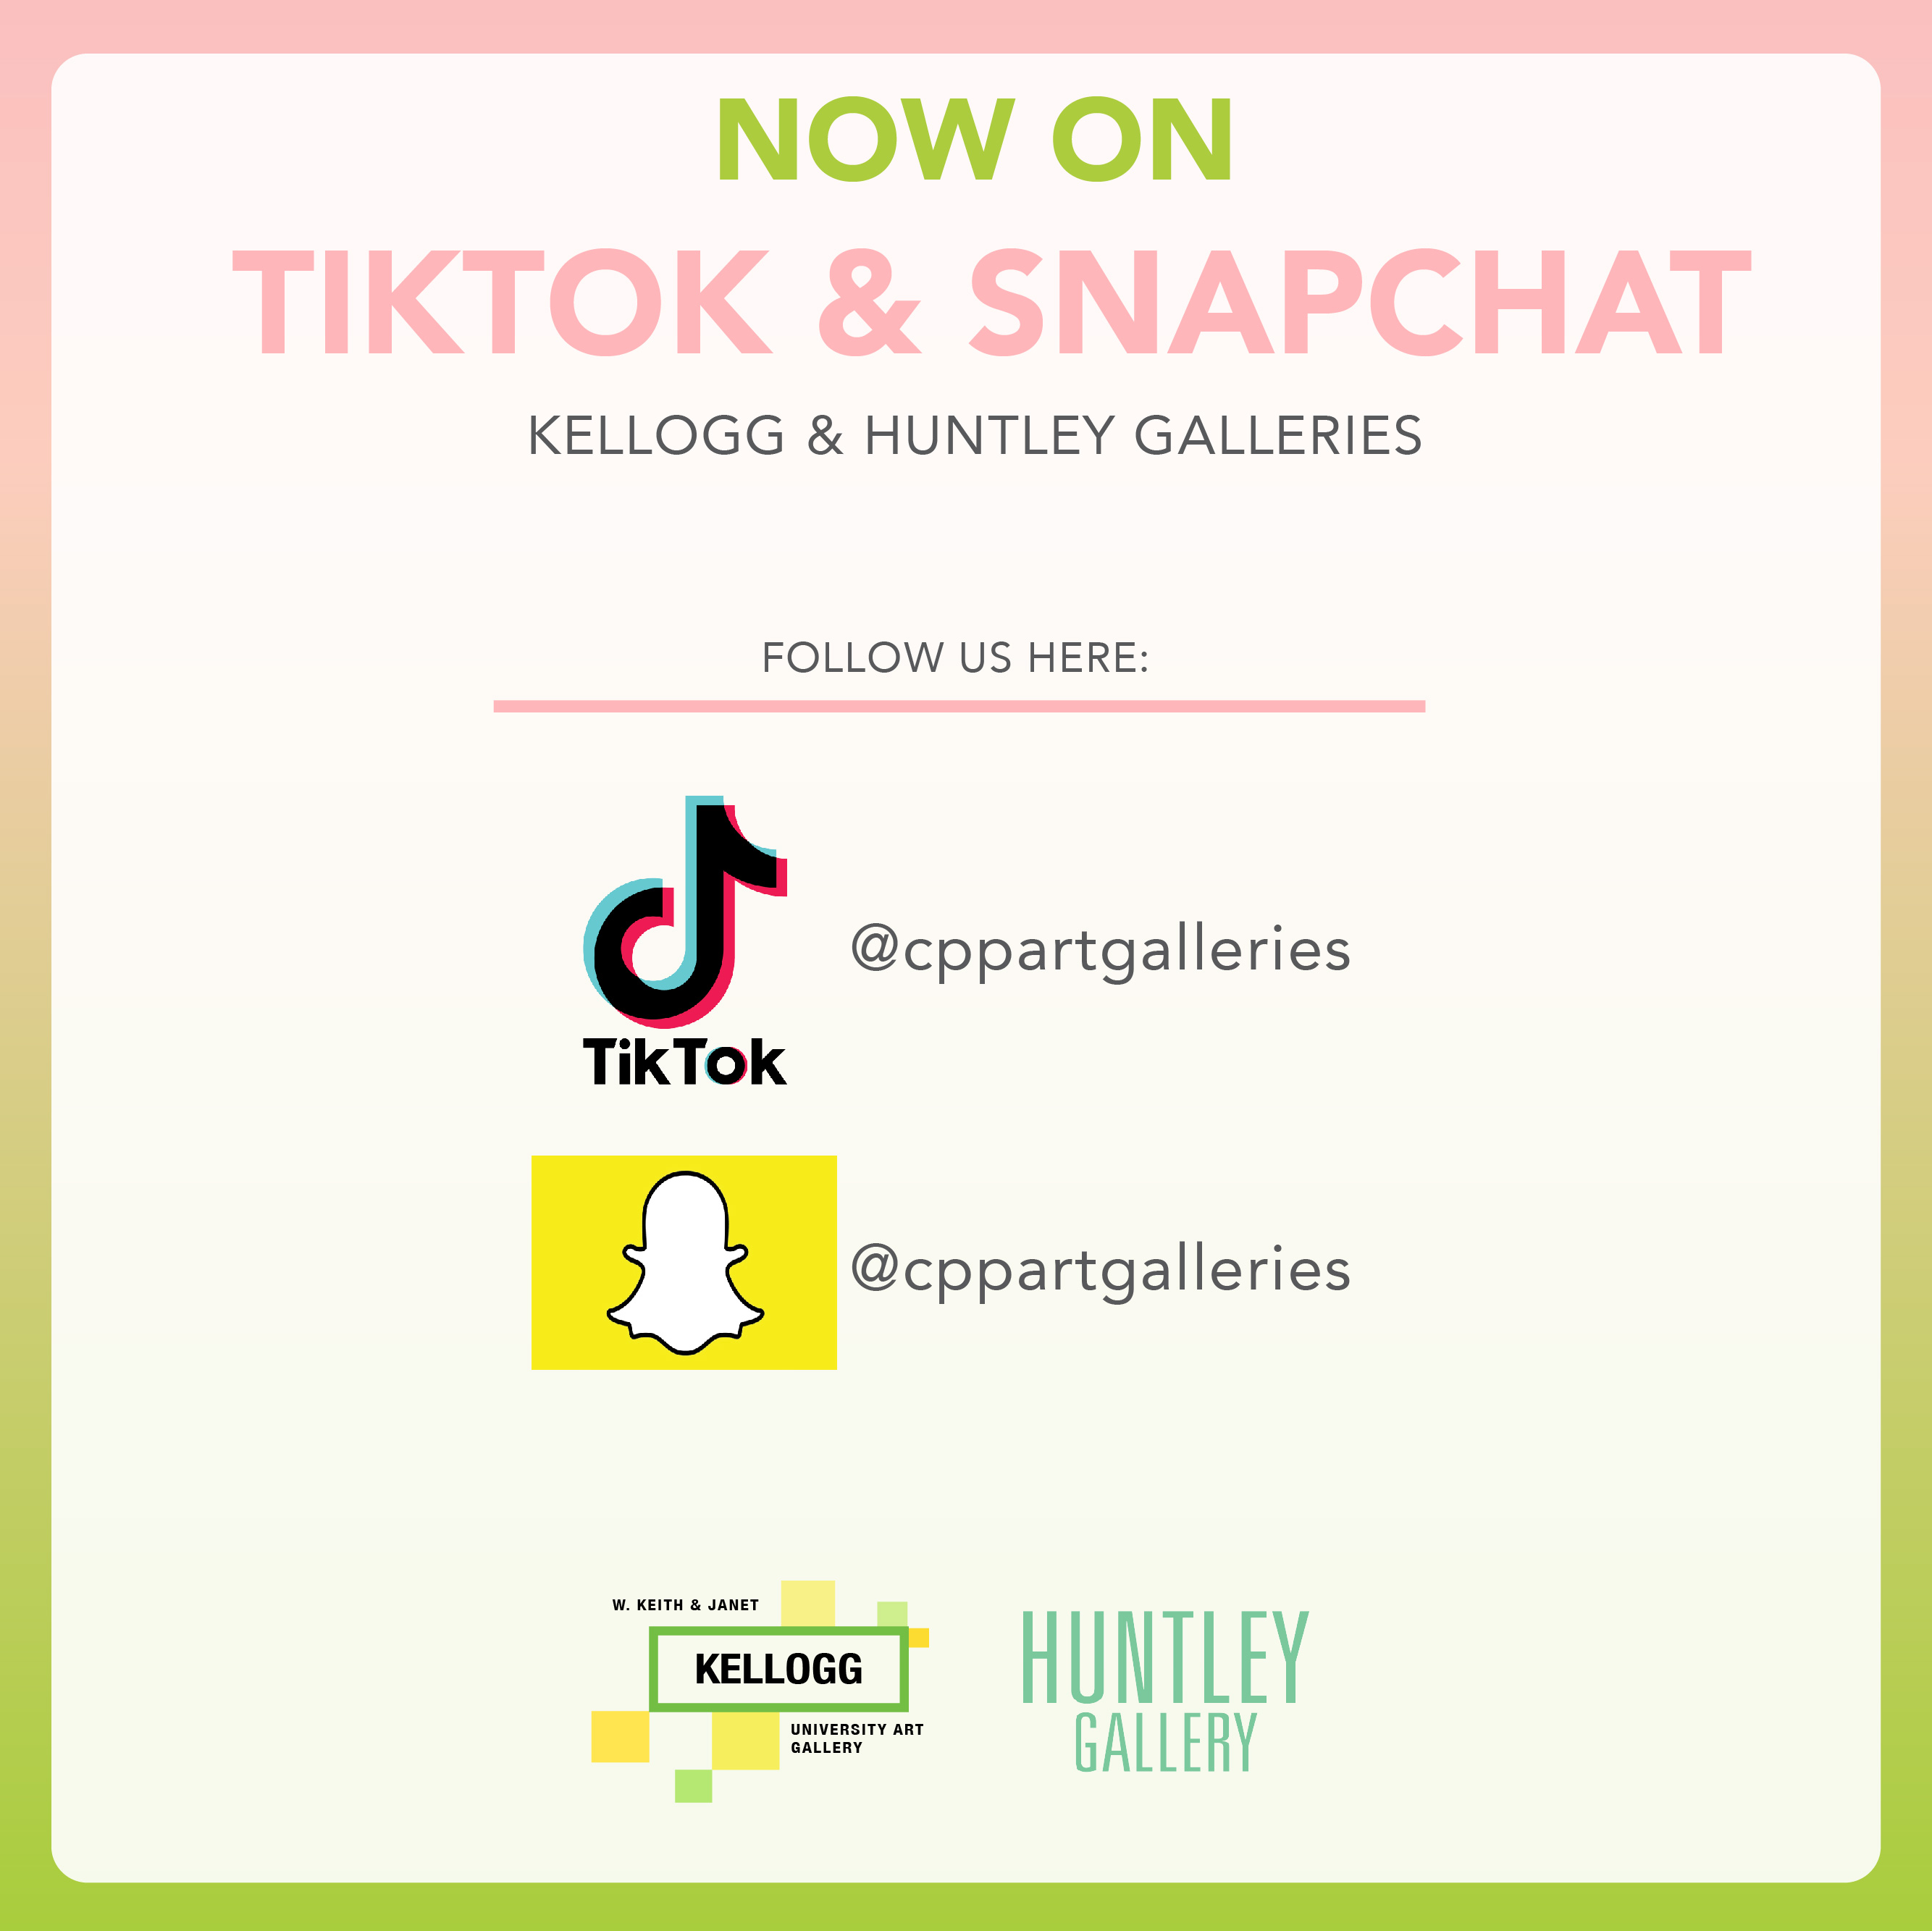 Now on TikTok & Snapchat Kellogg & Huntley Galleries. Follow us here: @cppartgalleries